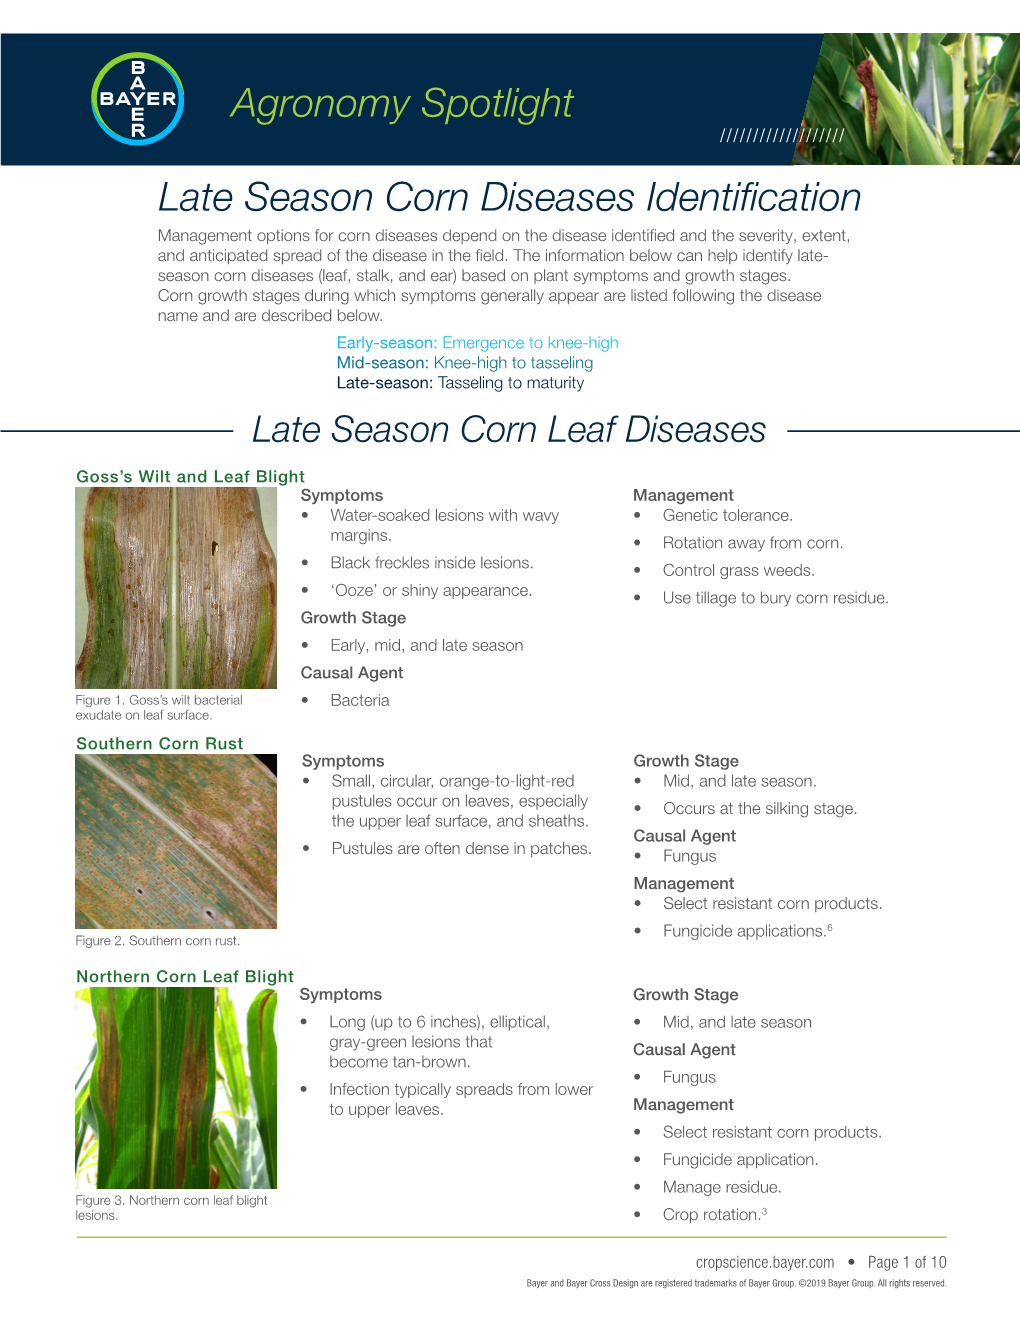 Agronomy Spotlight Late Season Corn Diseases Identification